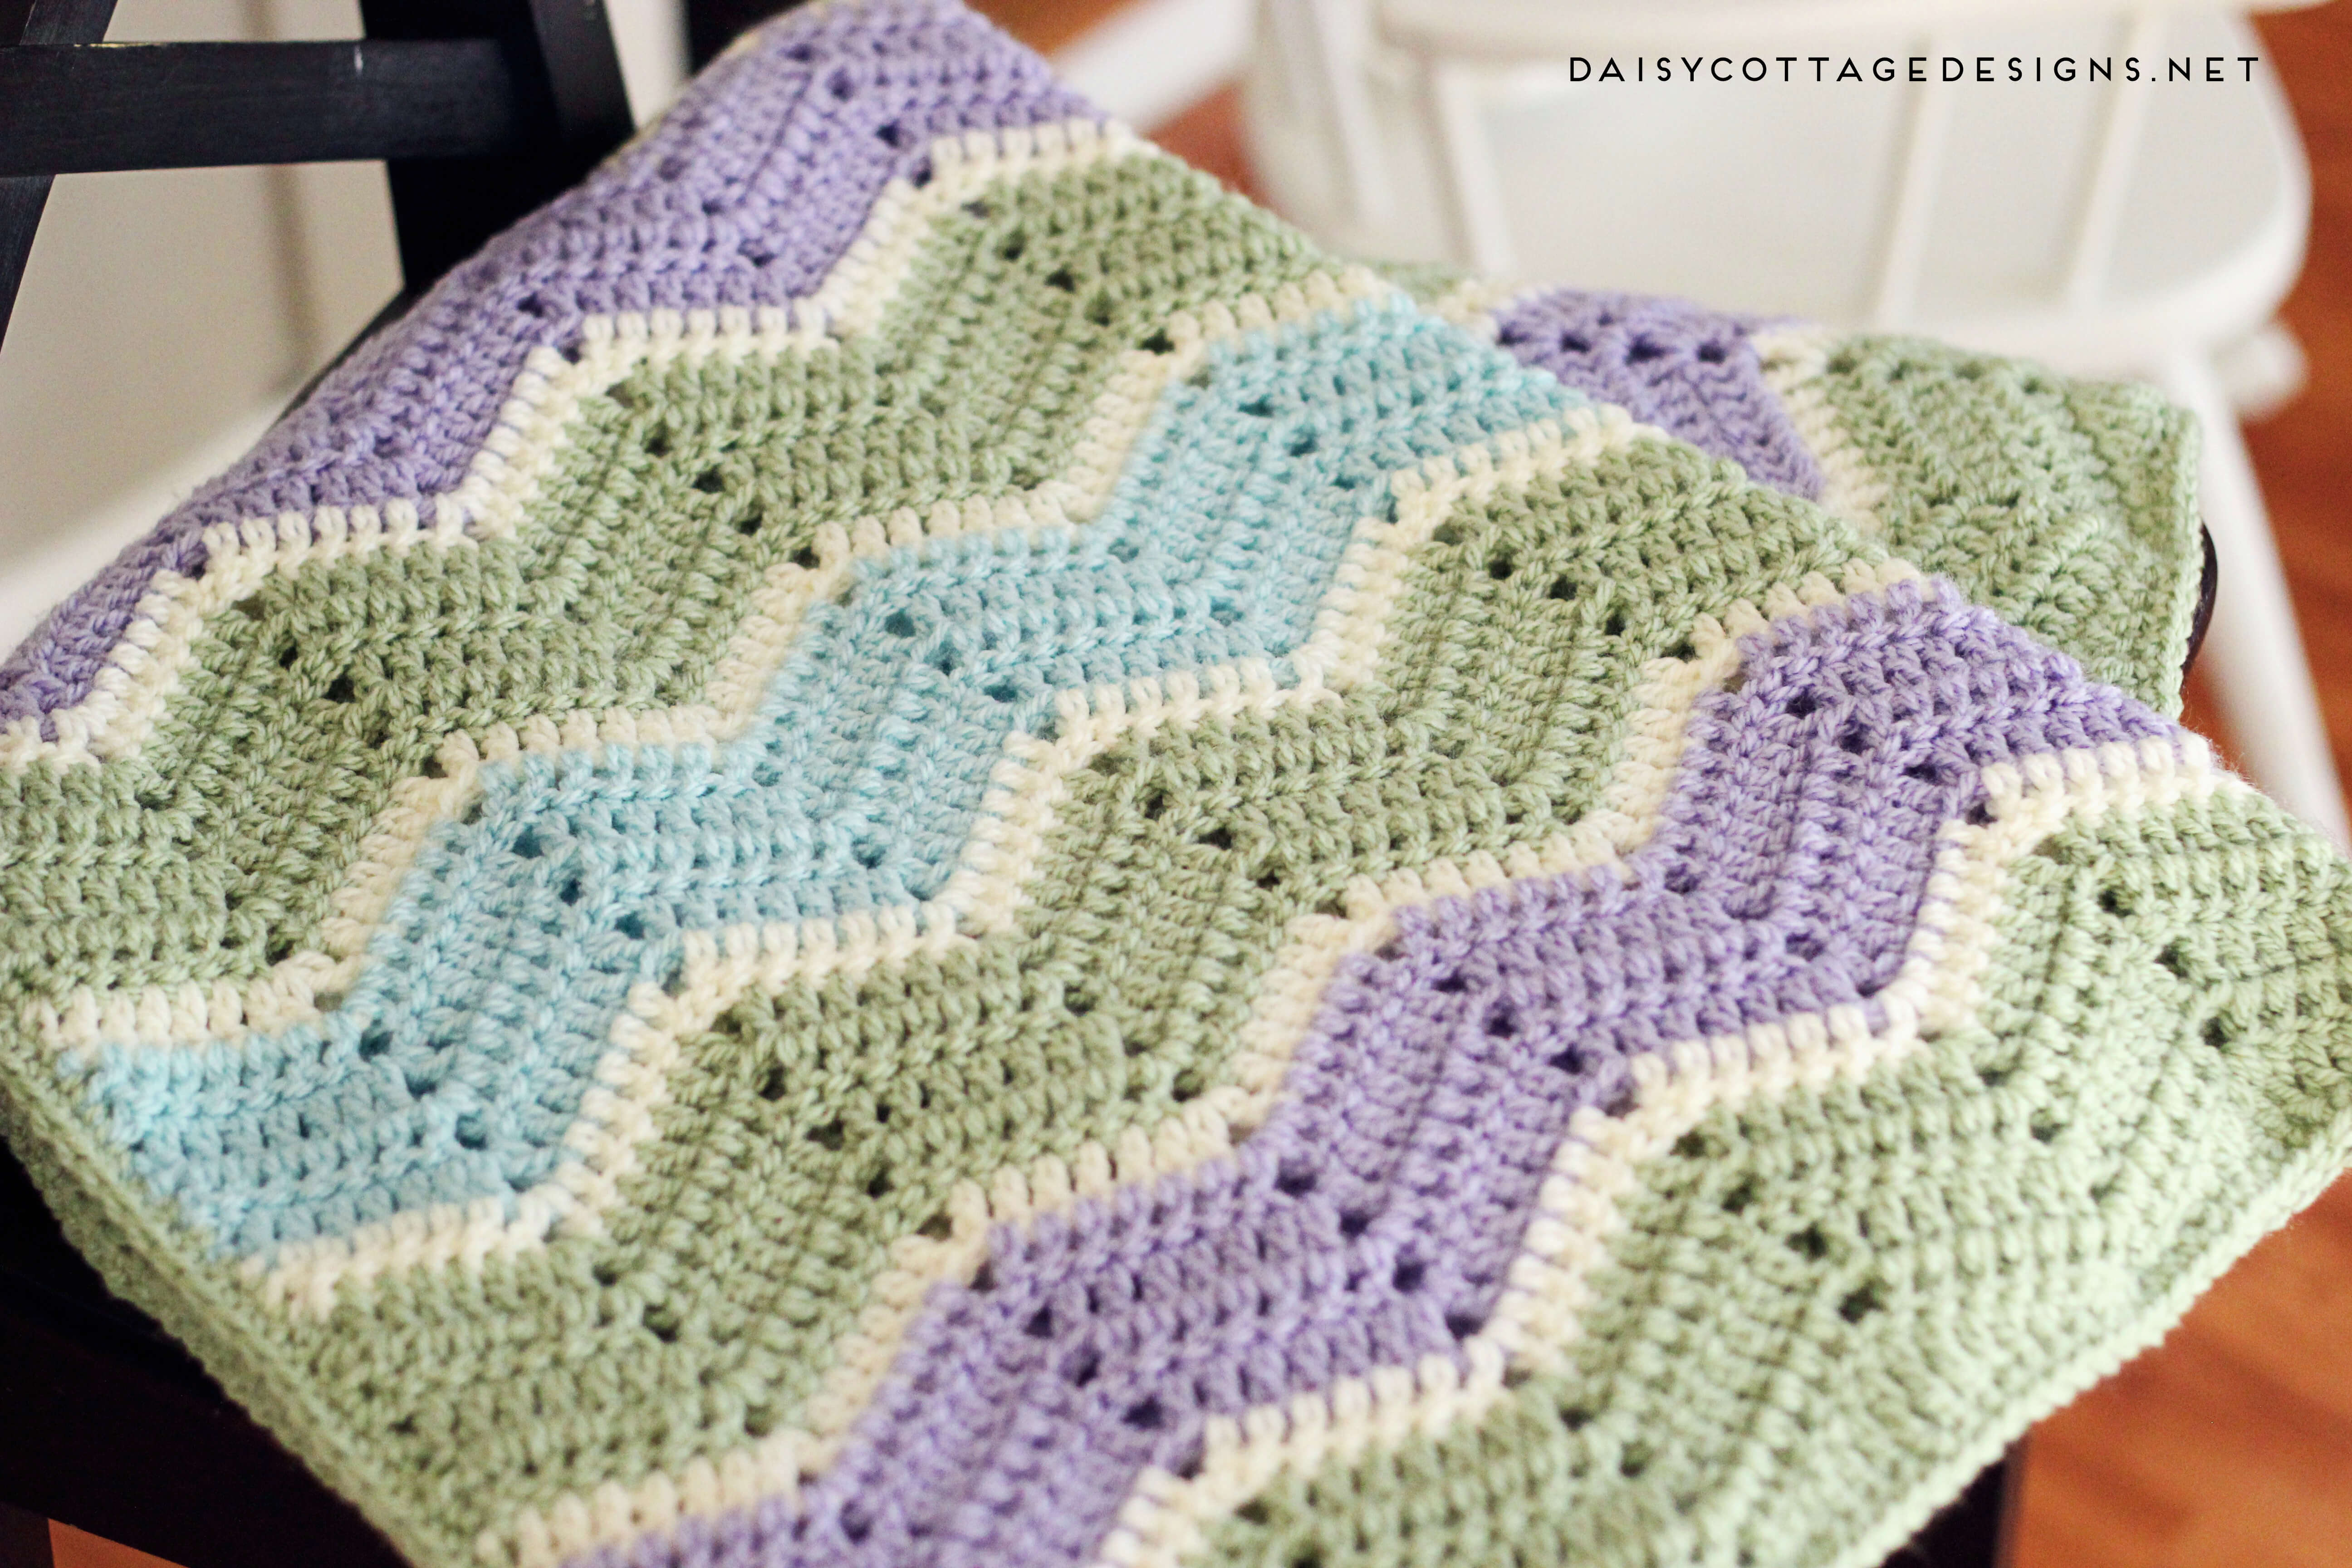 Crochet Baby Afghan Patterns Ripple Blanket Crochet Pattern Daisy Cottage Designs